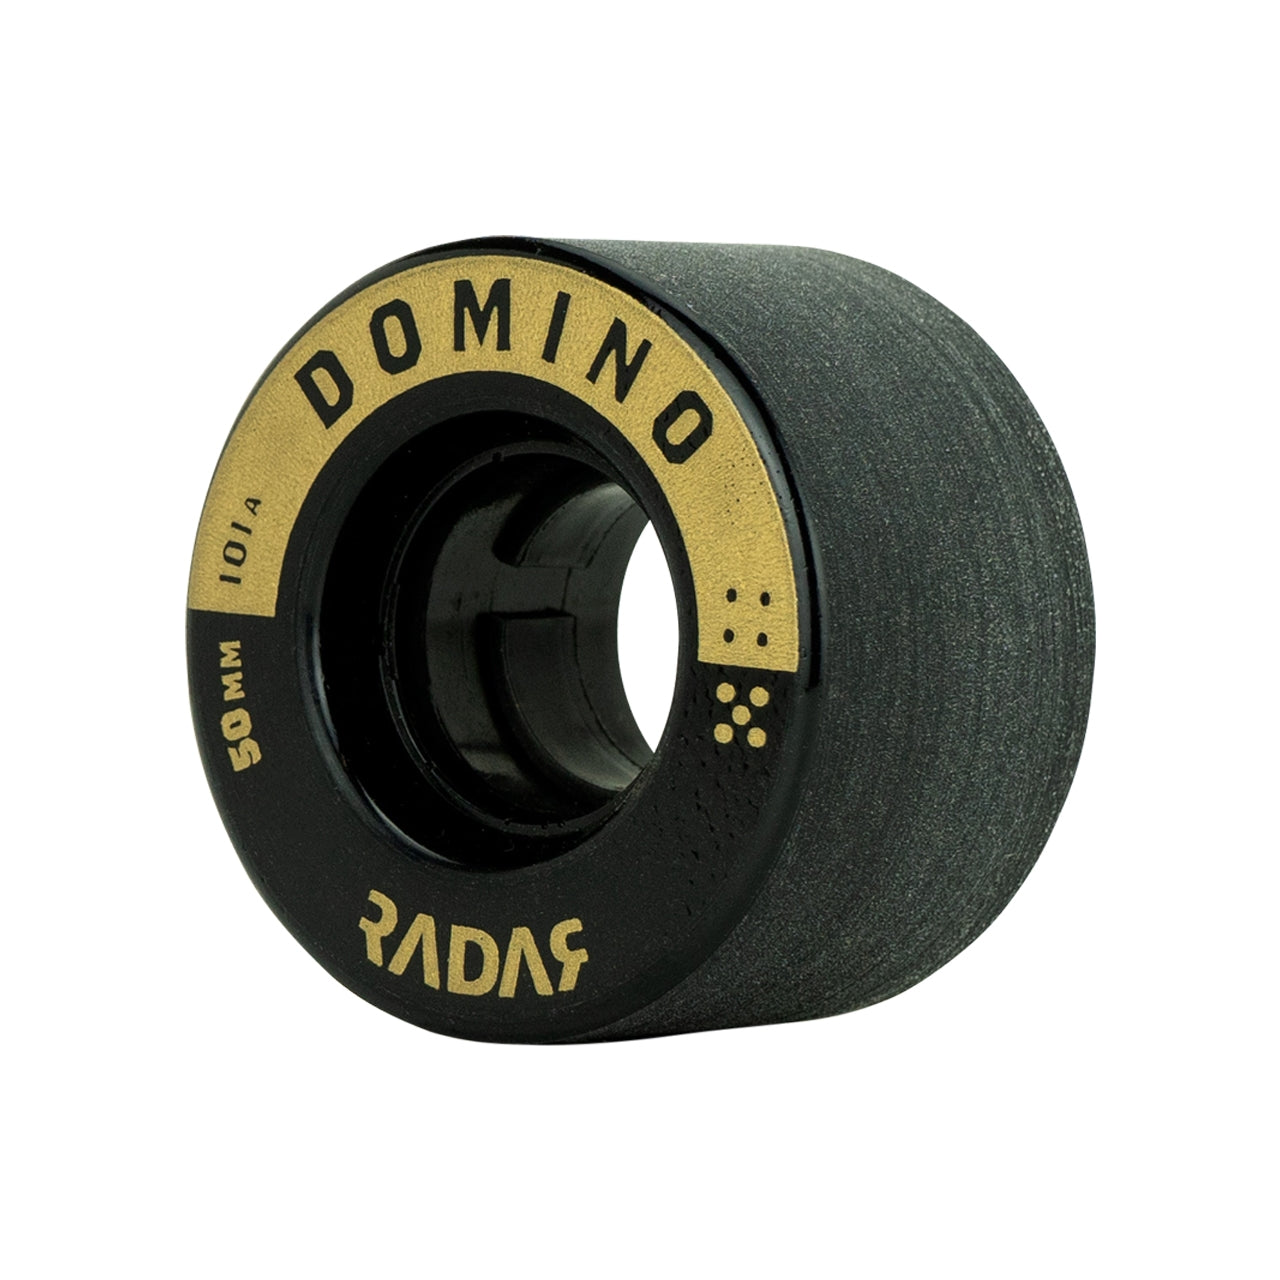 Radar Domino Black/Gold Wheels 50mm 101a - Set of 4